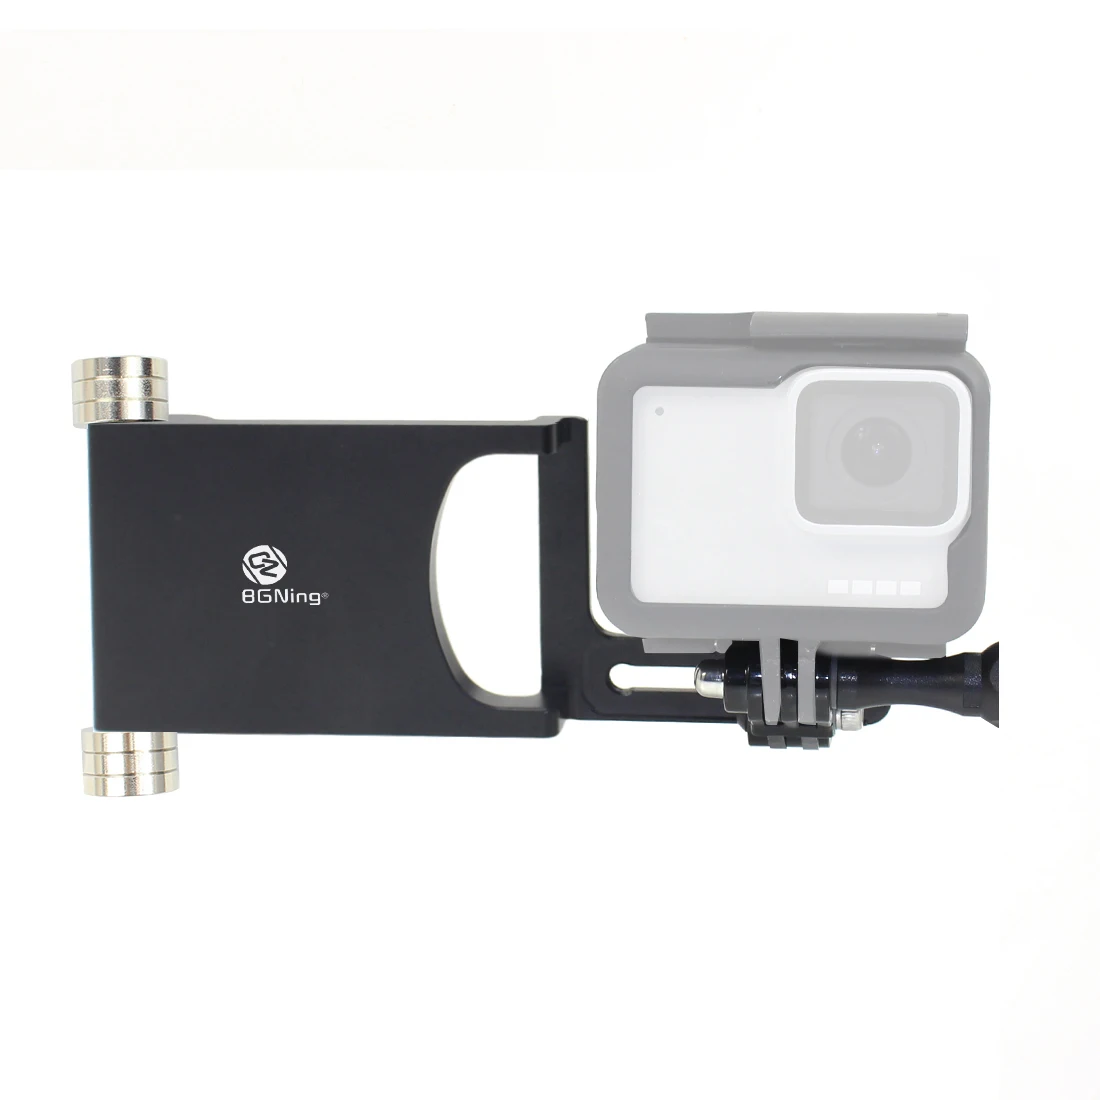 

BGNing Aluminum Gimbal Switch Mount Adapter Plate for DJI MOZA Selfie Handle w/ Mini Tripod for GOPRO 8 Sports Camera Holder